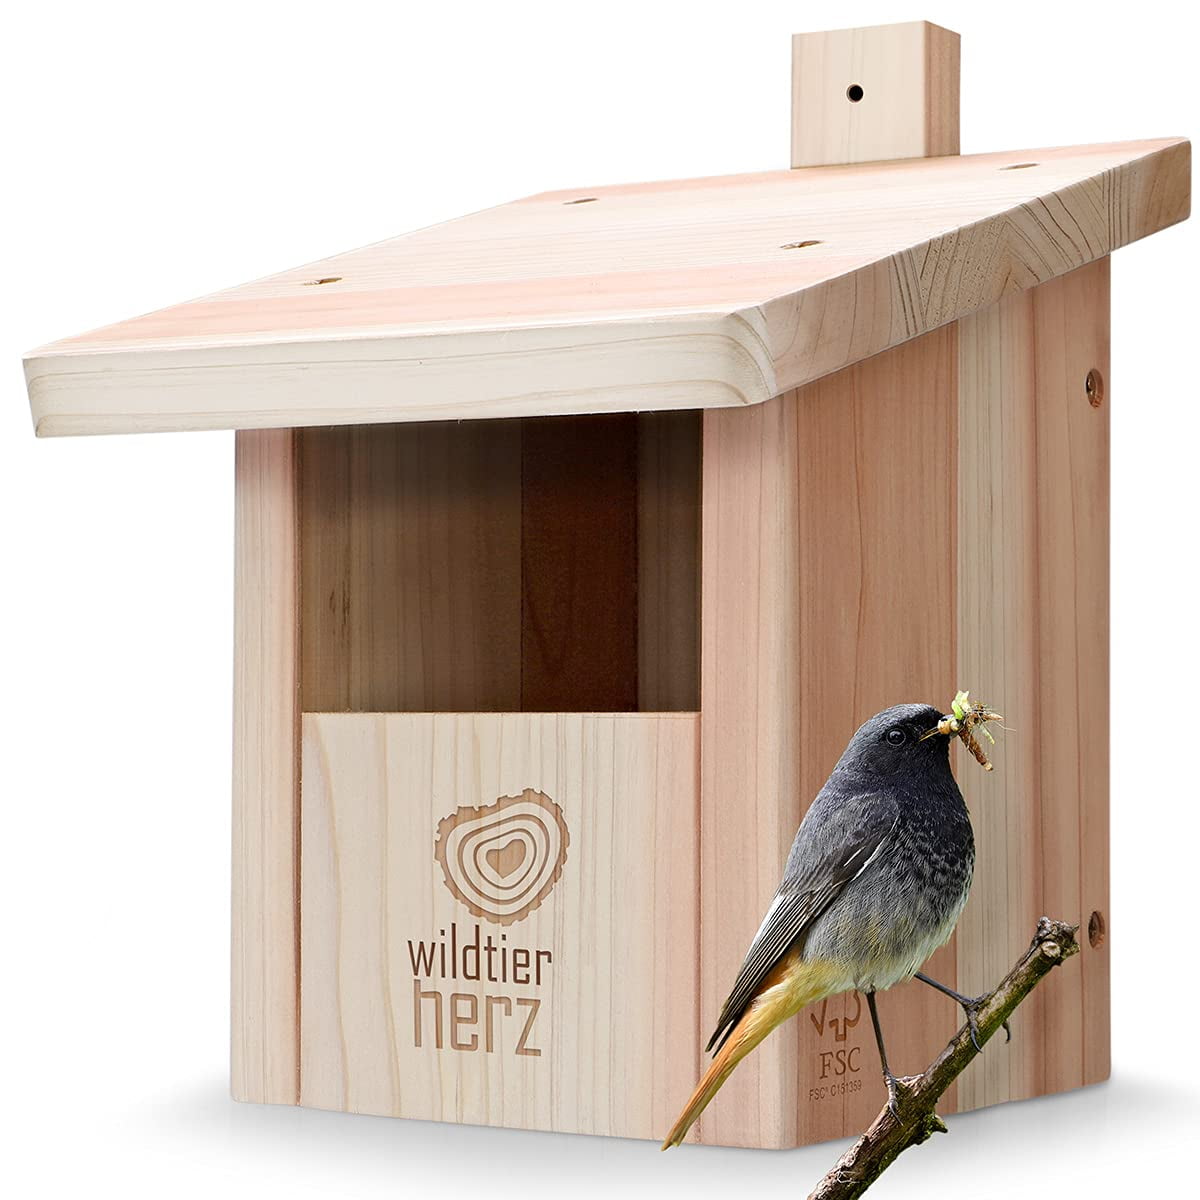 Wildtier Herz Nesting Box For Half-cave Breeders - Bird Box, Nest Box,  Solid Wood Untreated Weatherproof, Bird Nesting Box For Garden, Bird House  And